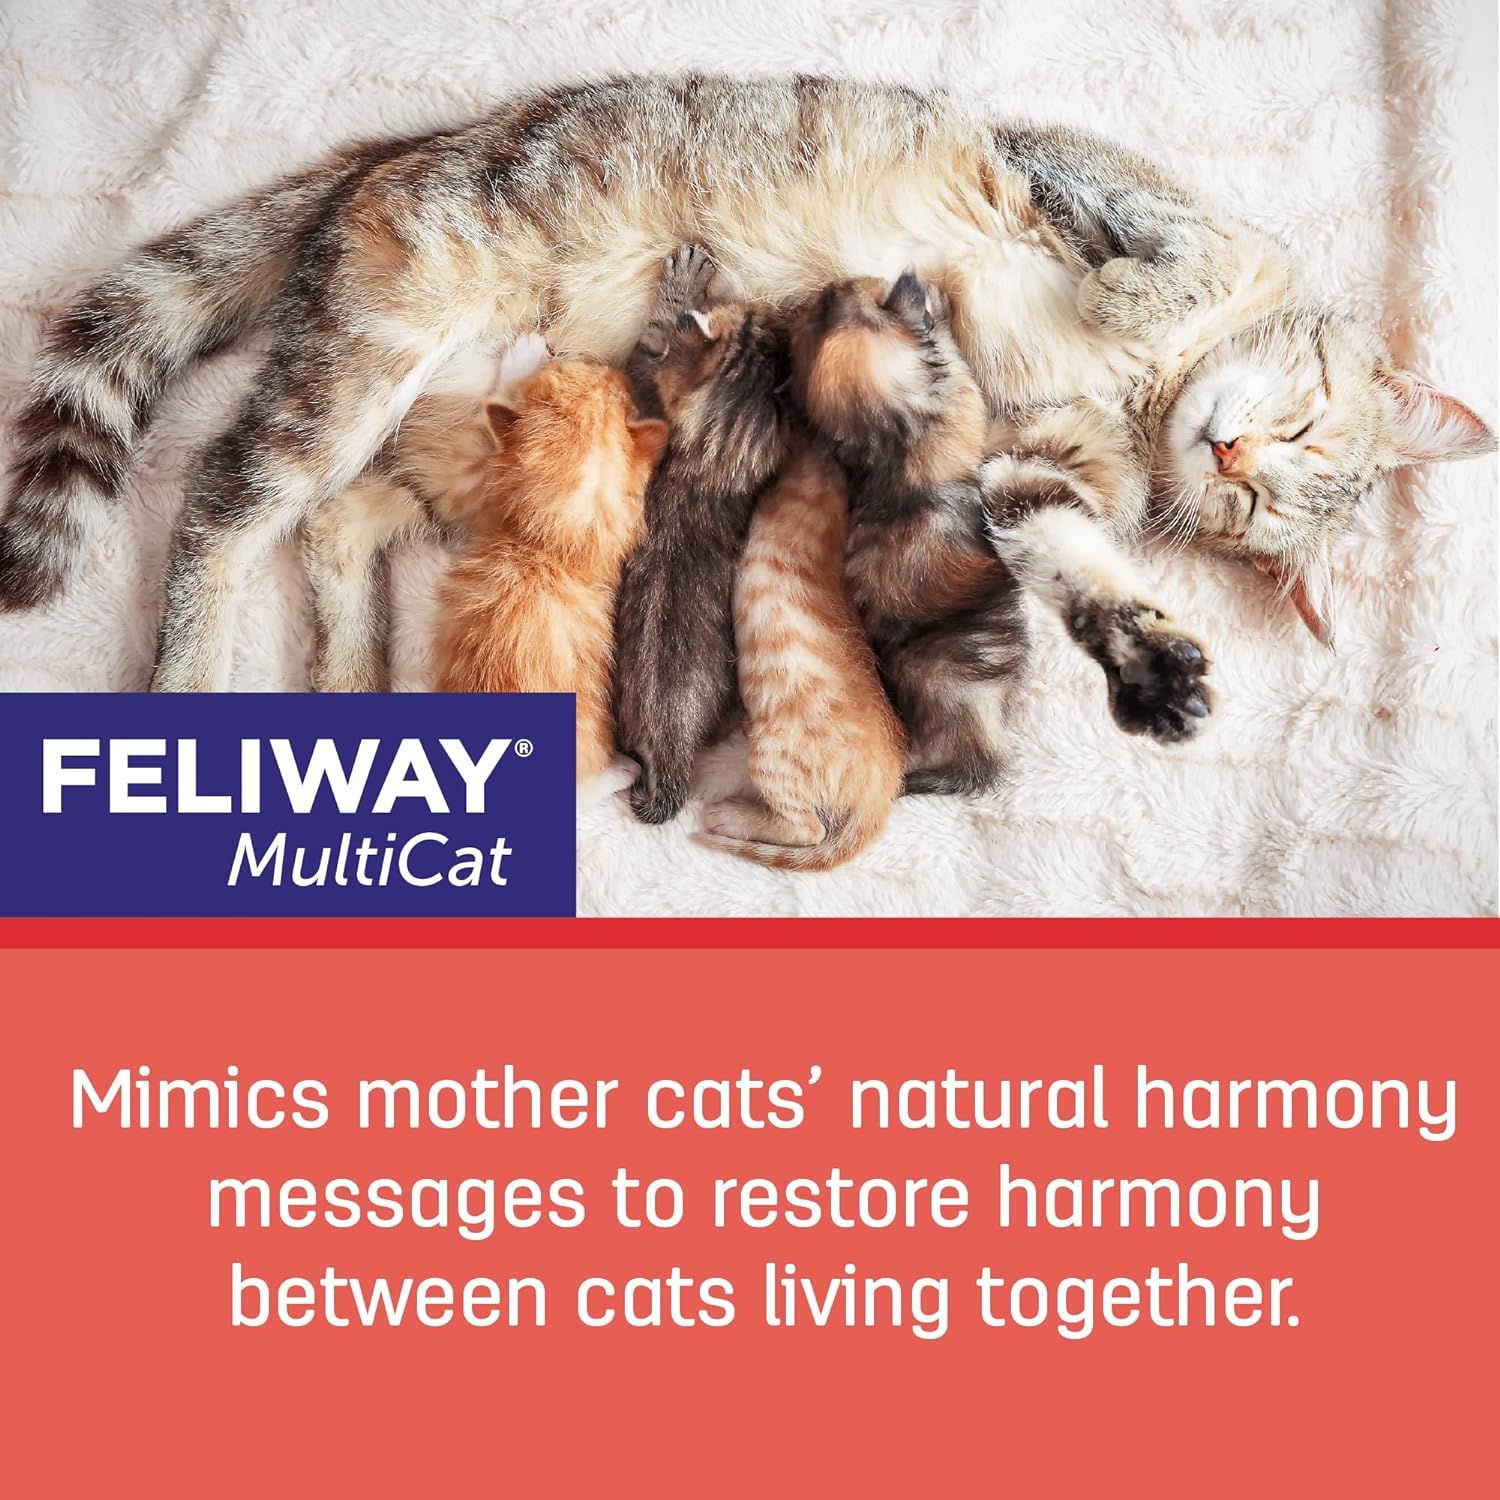 FELIWAY Classic Cat Calming Pheromone, 30 Day Refill - 6 Pack